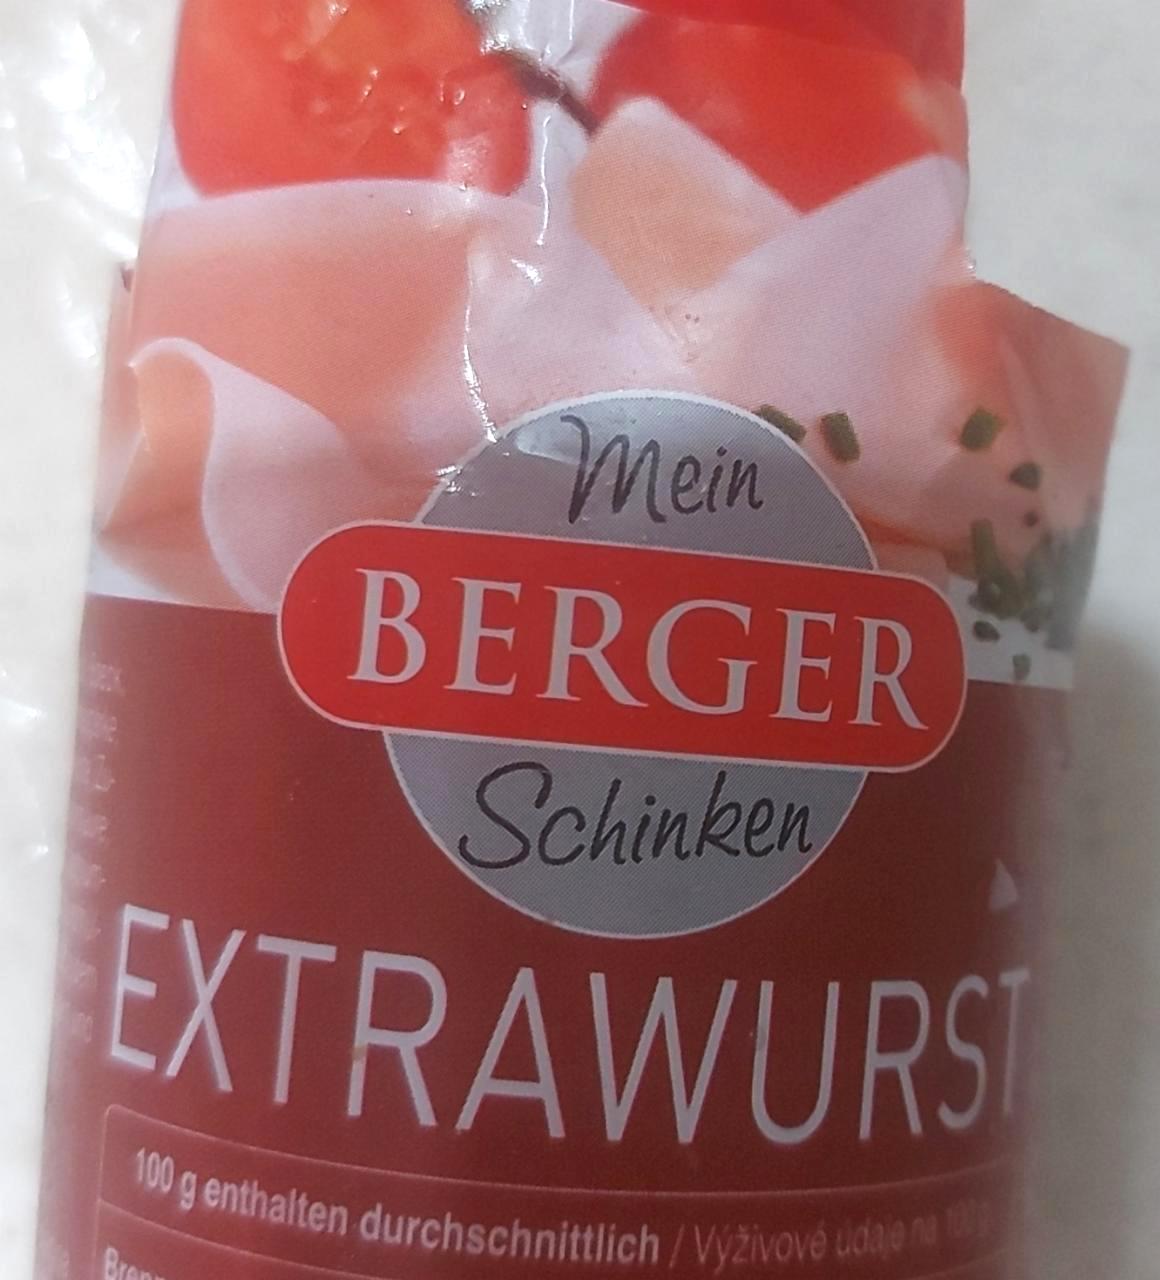 Képek - Extrawurst Berger